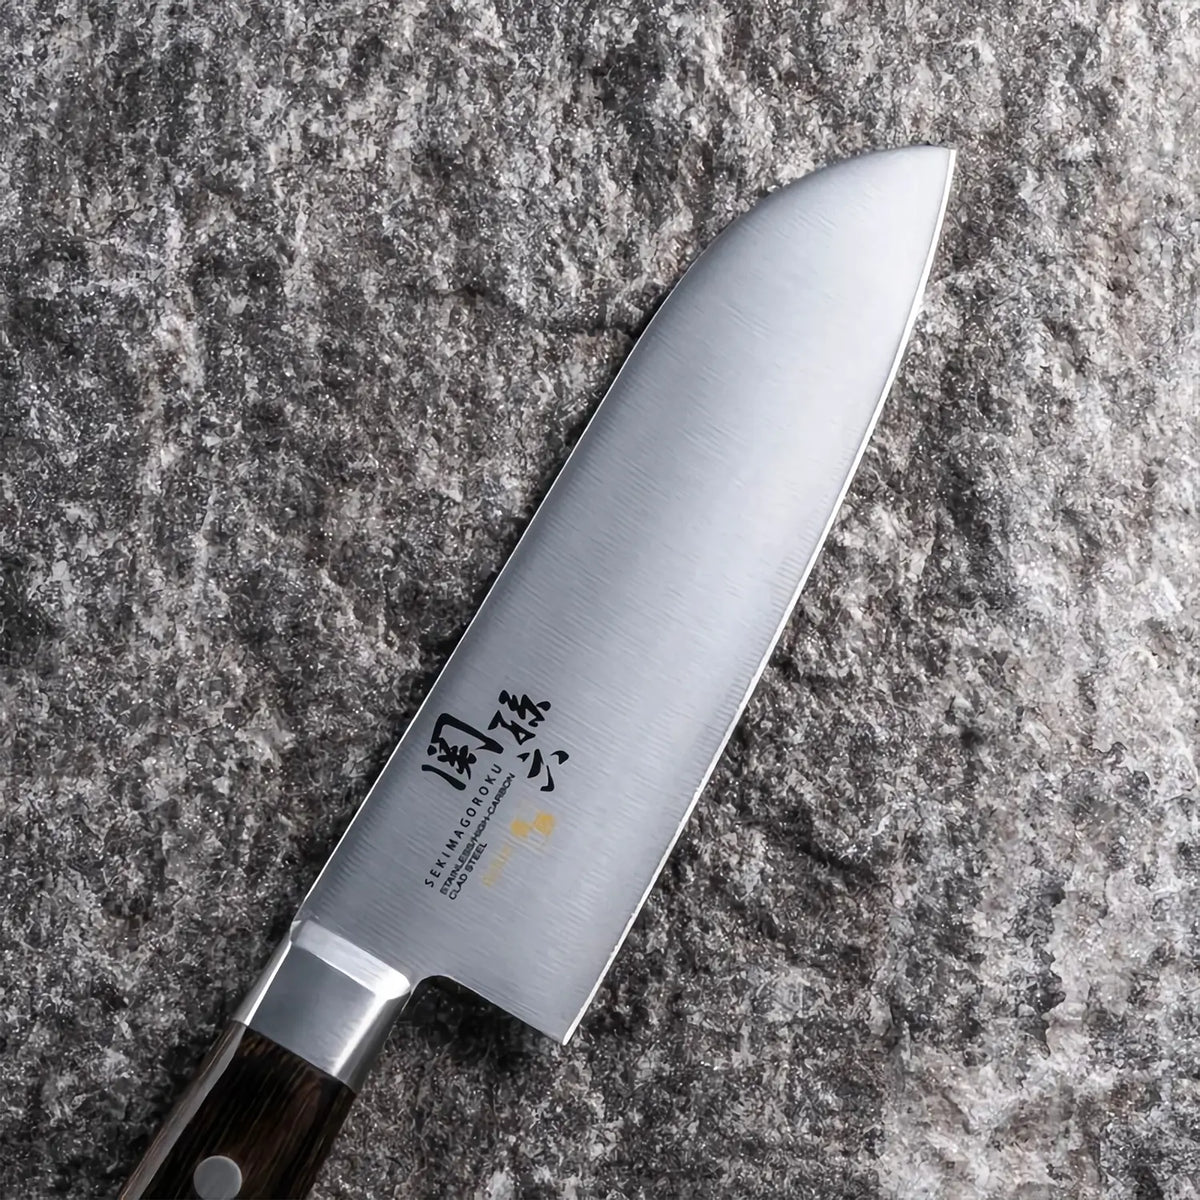 Kitchen Knife knives set KAI Stainless carbon Clad steel AOFUJI